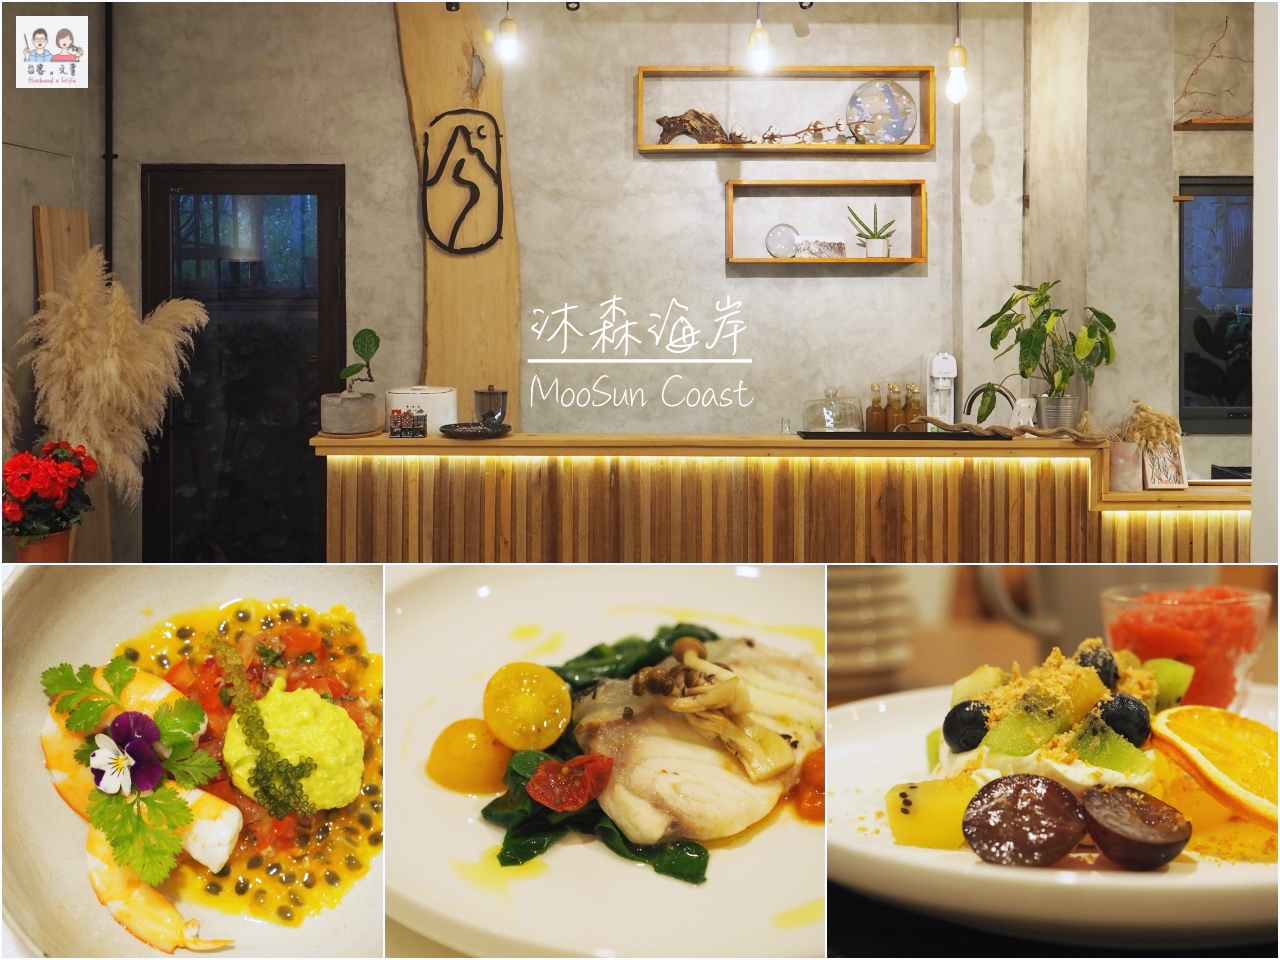 【沖繩⋈美食】坐擁山林海景的「カフェ こくう」 享用新鮮自然的野菜料理 @台客X文青的夫婦日常